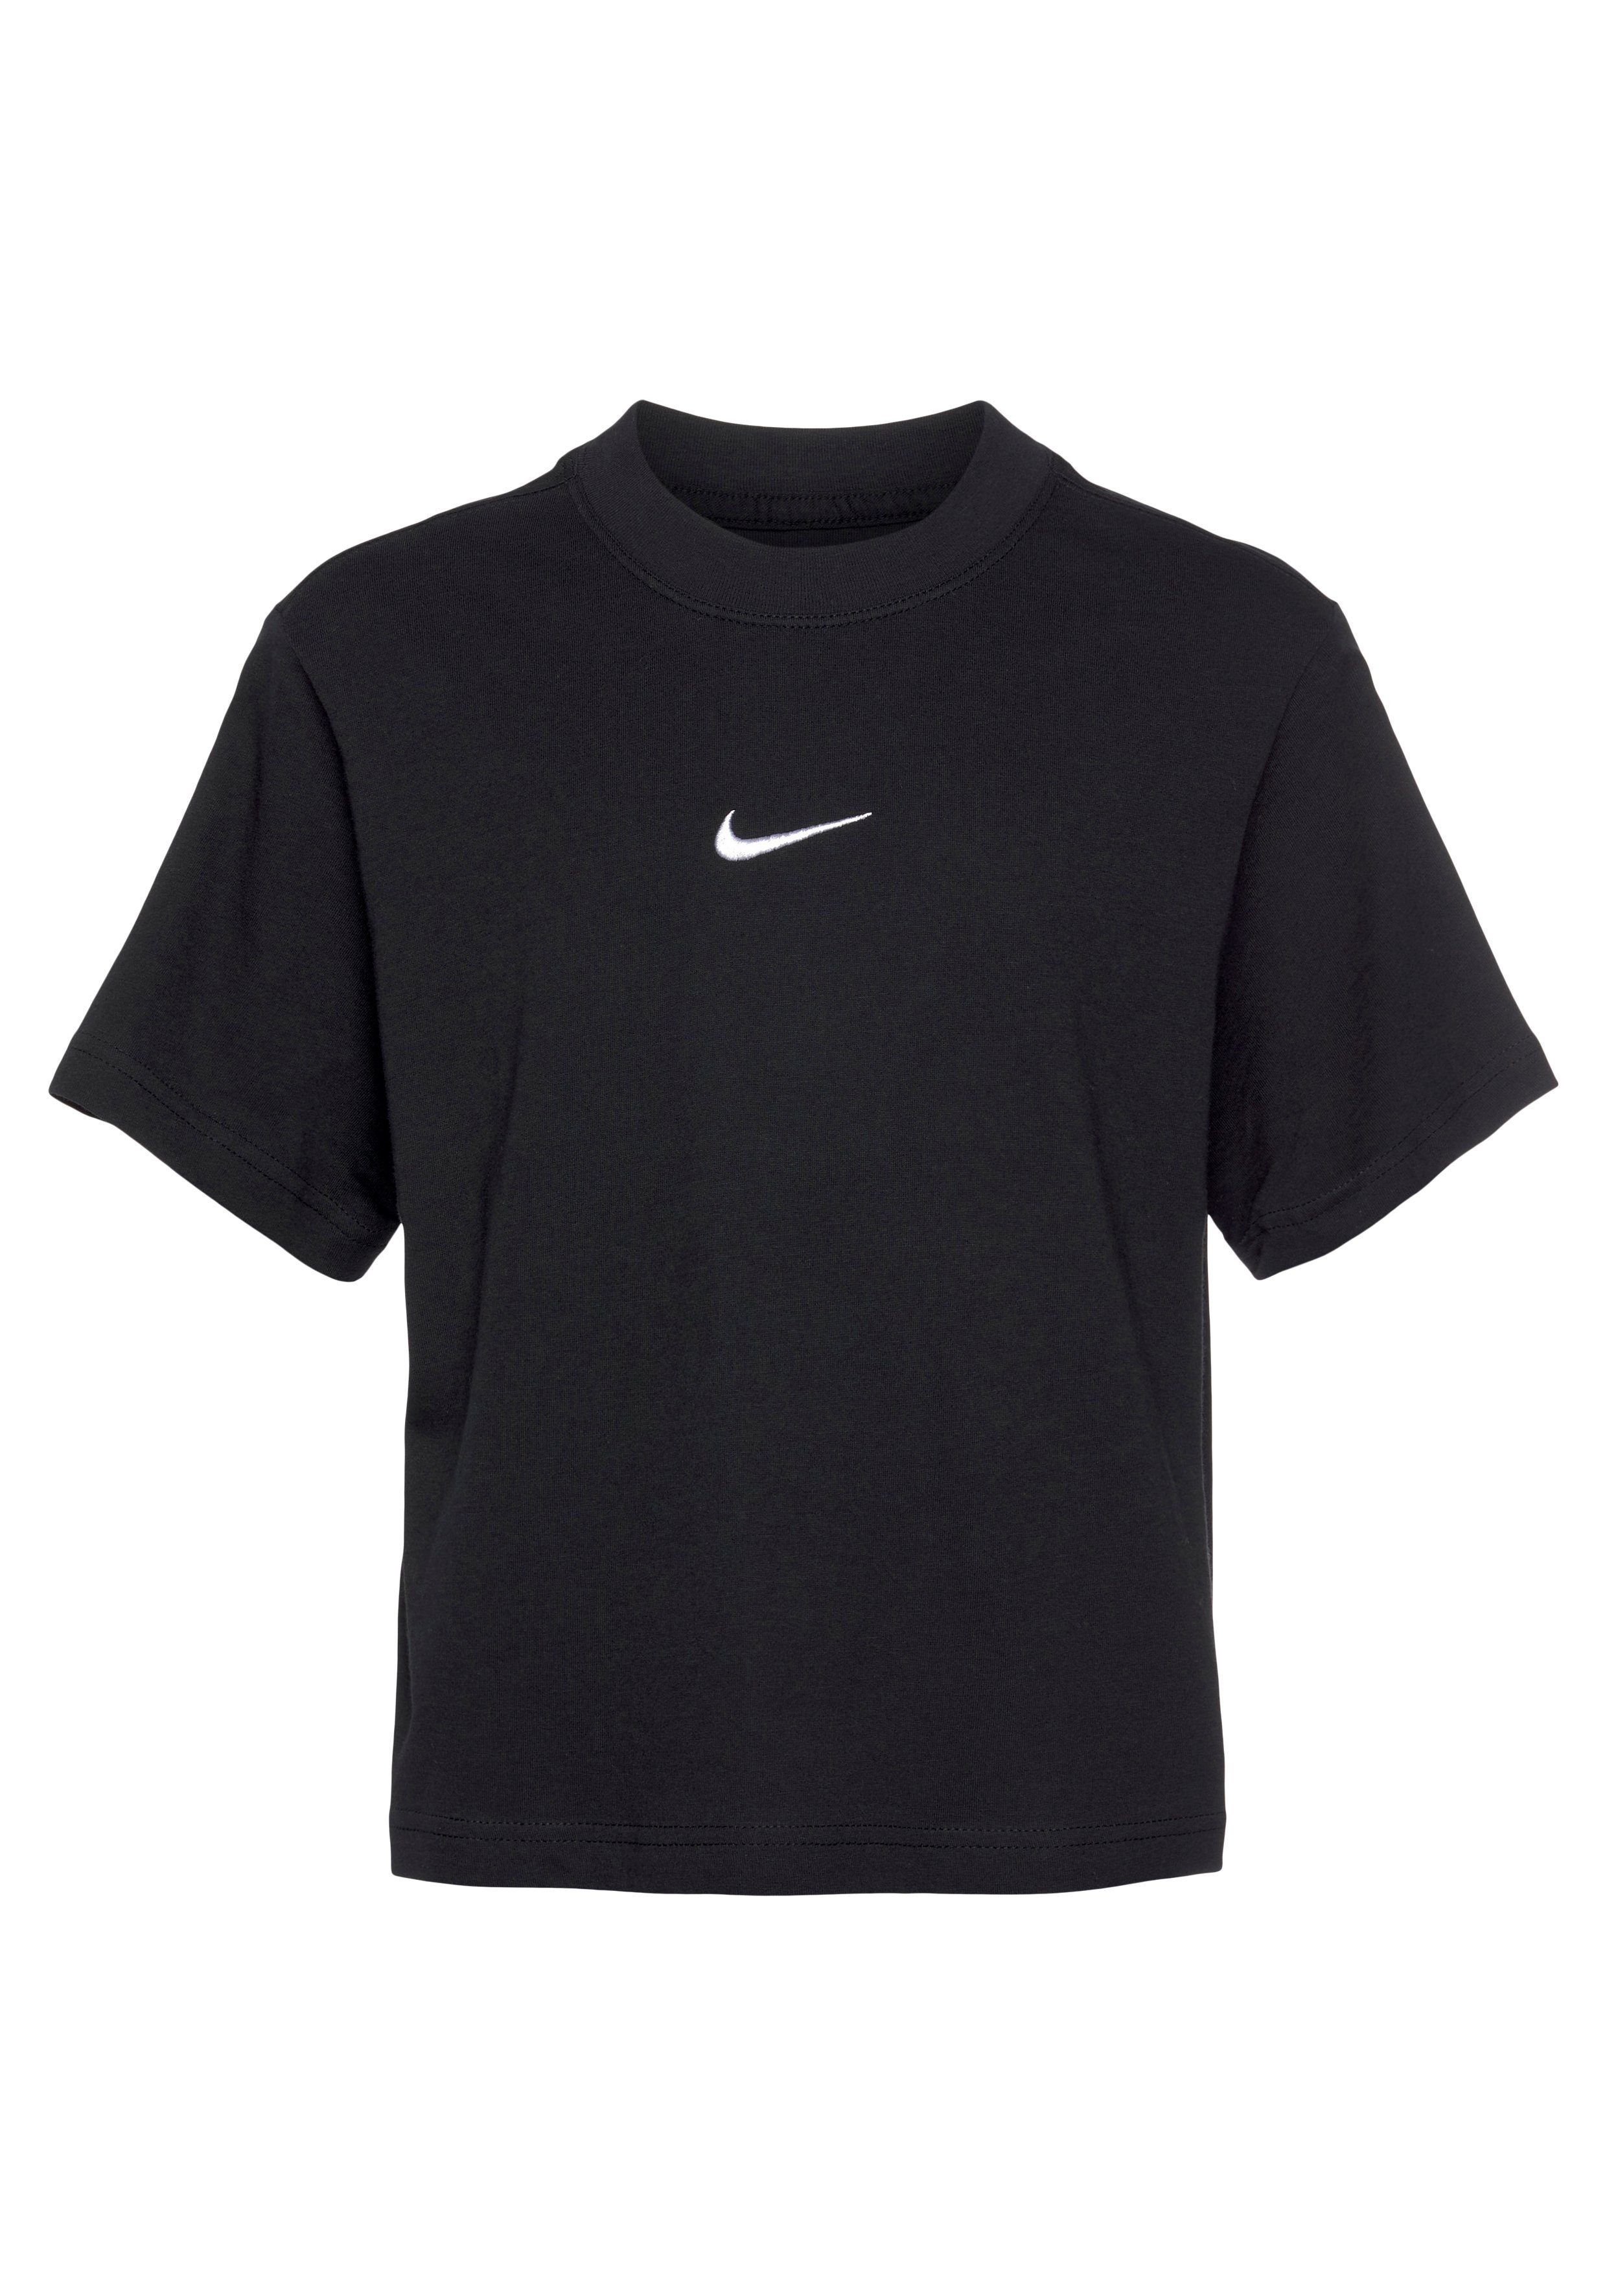 (GIRLS) KIDS' Sportswear T-Shirt T-SHIRT BIG Nike BLACK/WHITE